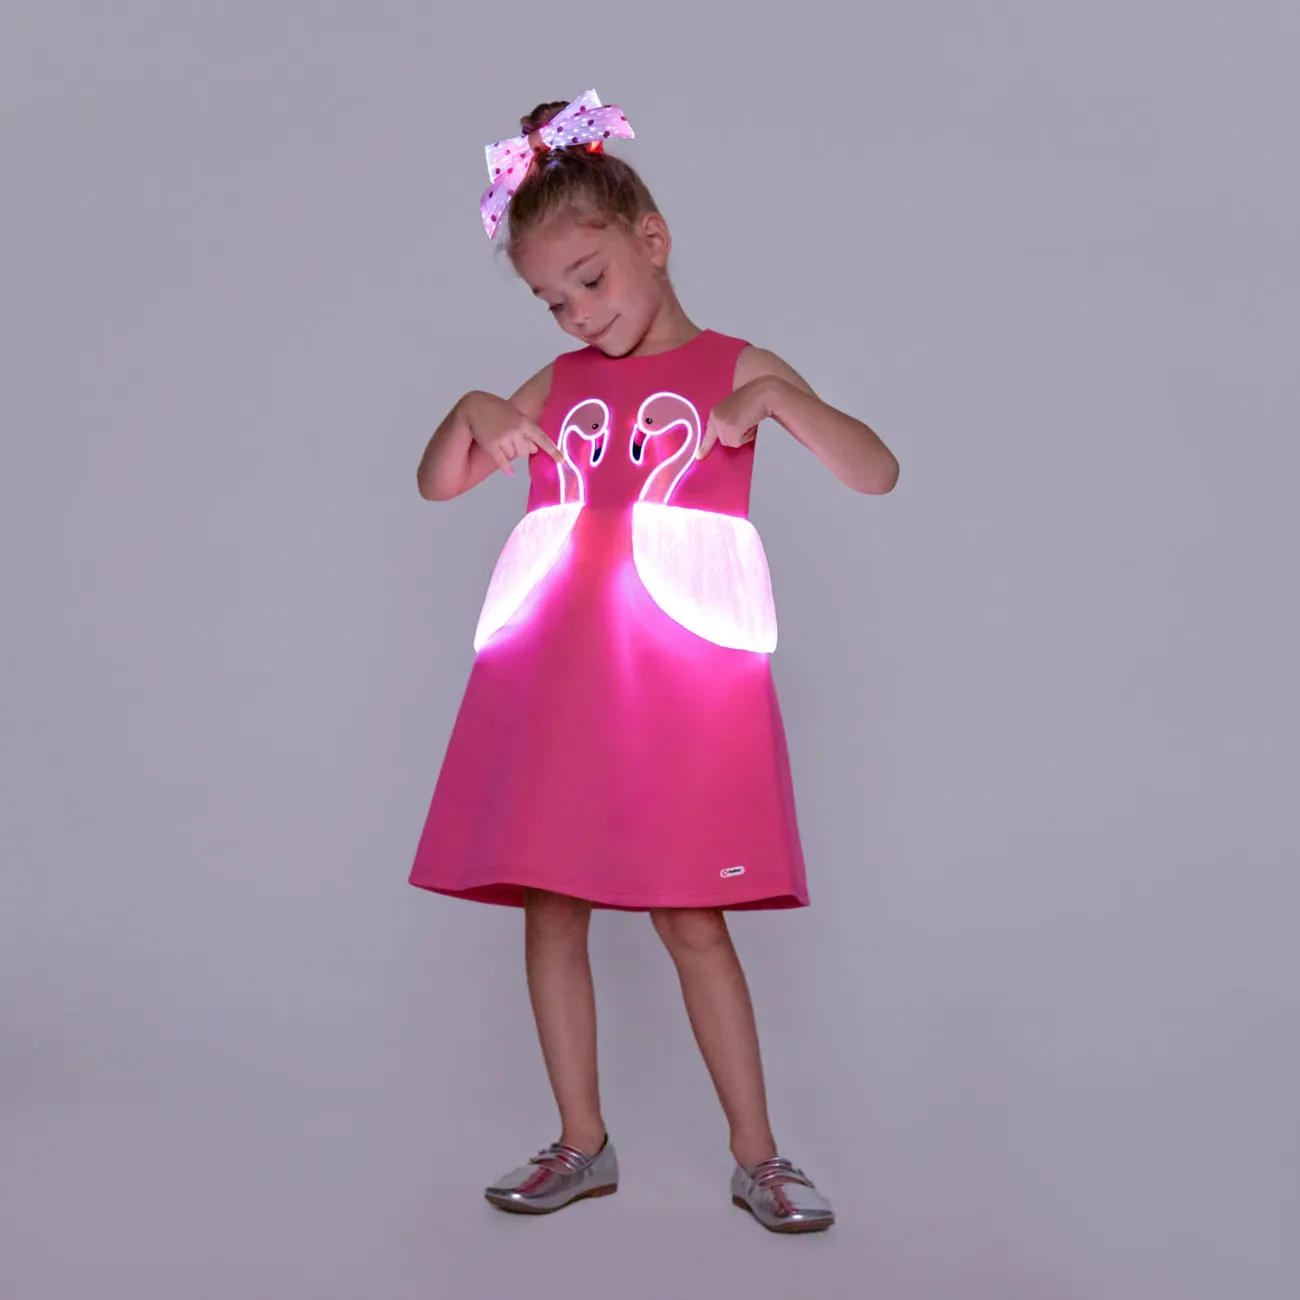 Go-Glow Illuminating Toddler Dress with Light Up Skirt Including Controller (Battery Inside) Hot Pink big image 1